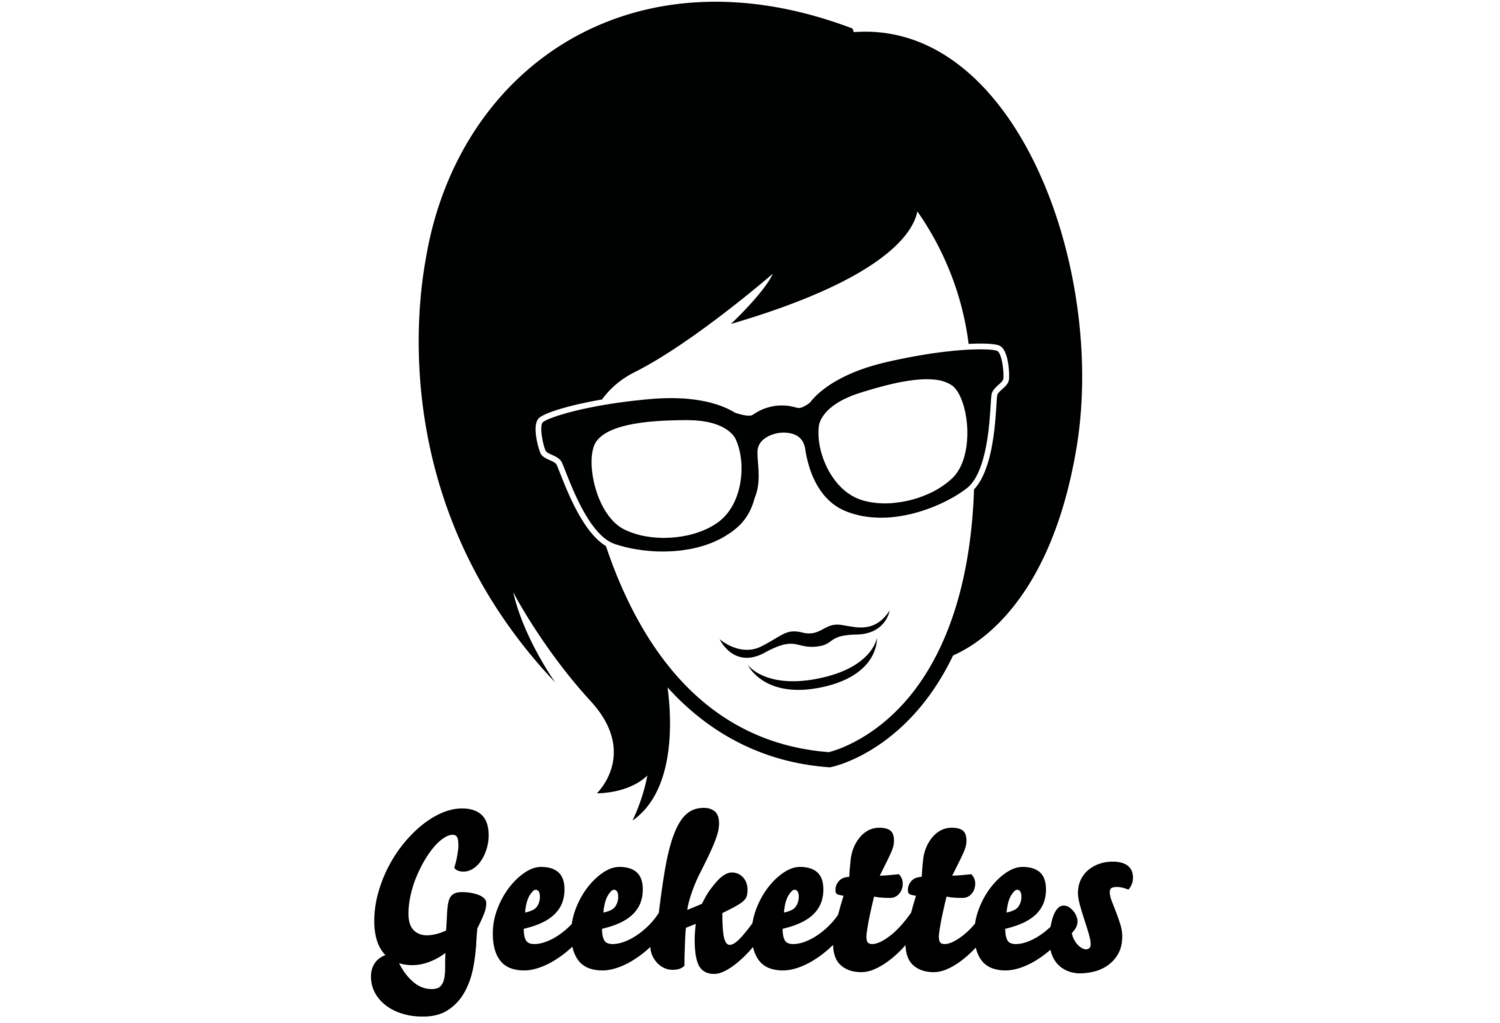 Geekettes logo